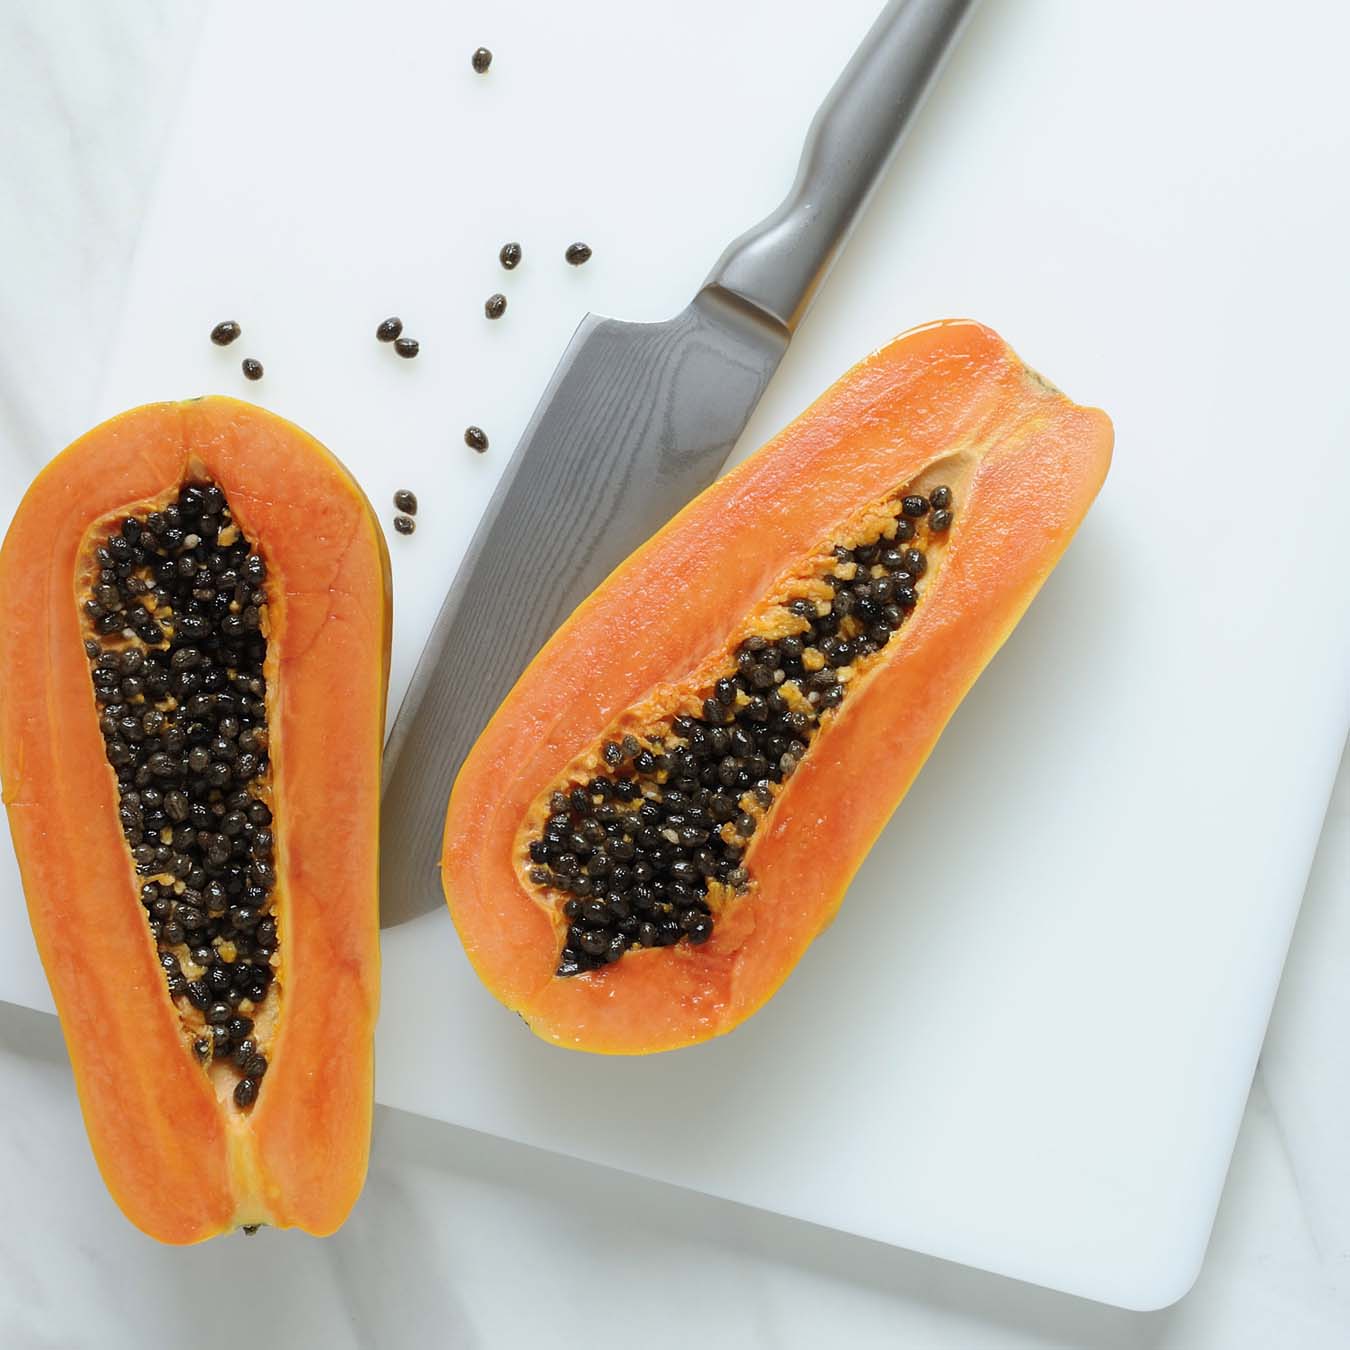 sliced papaya on white board - knife lies next to it